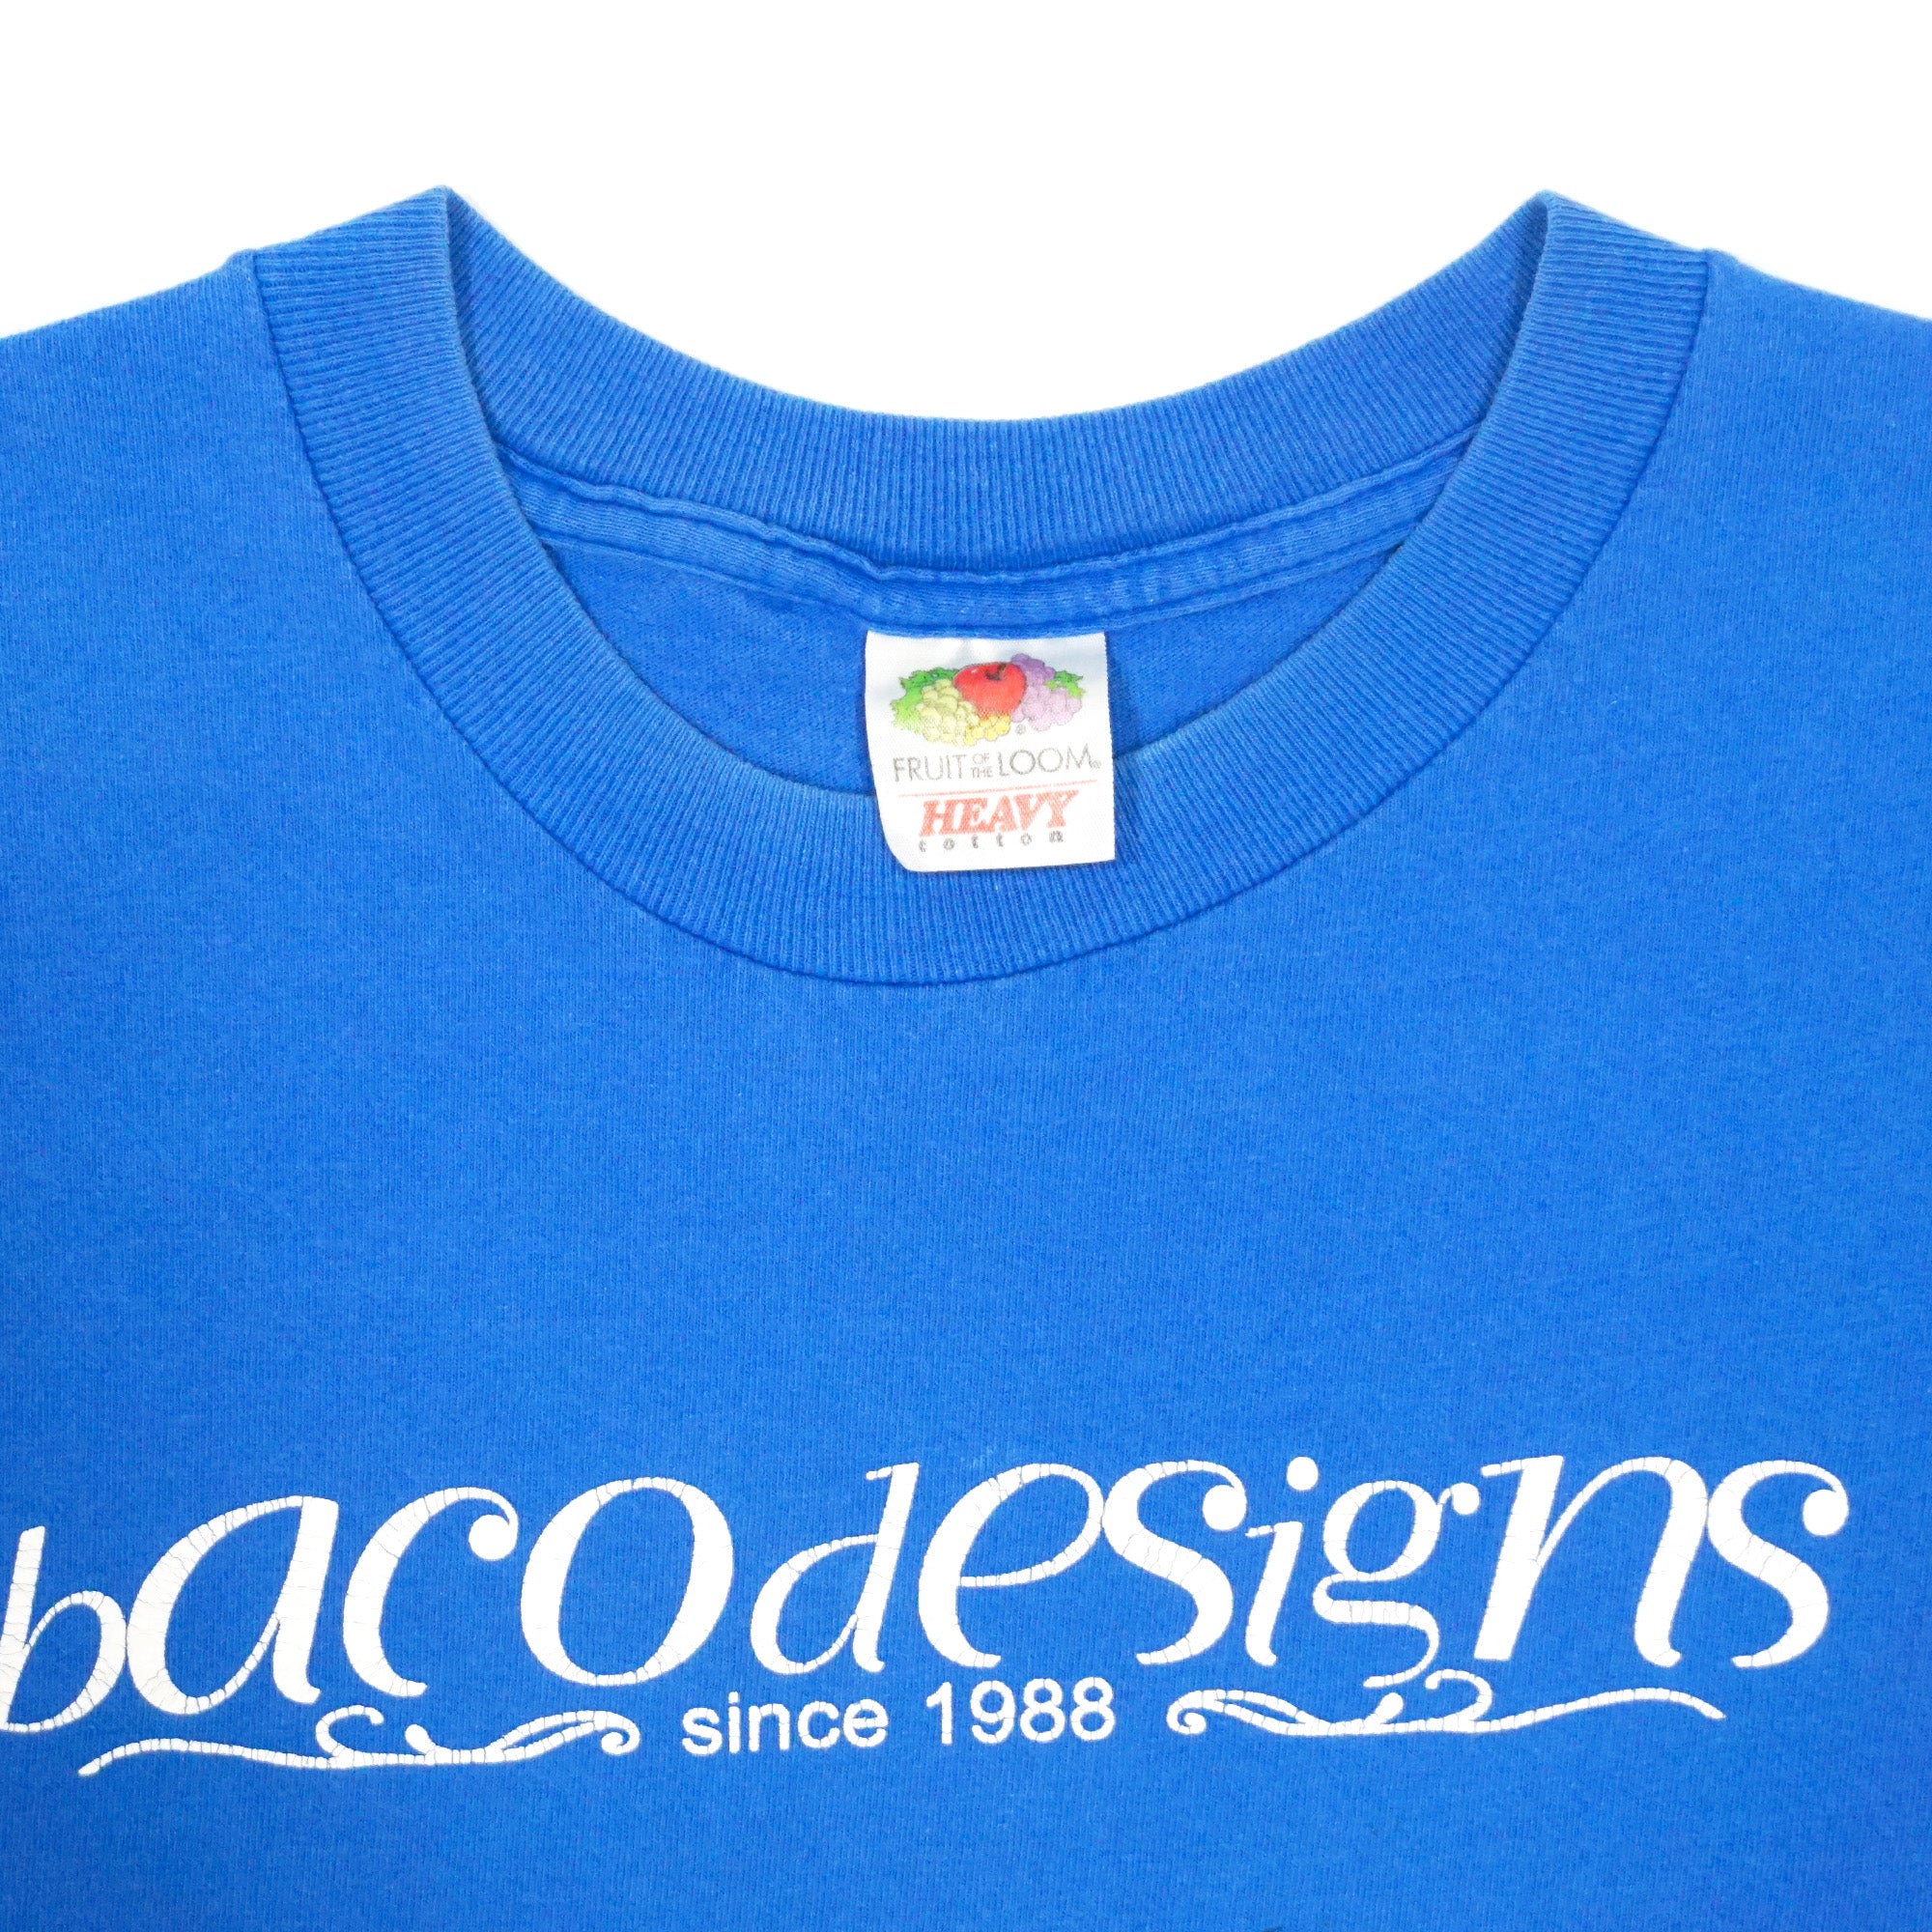 Baco Designs - Since 1988 Shirt (L)